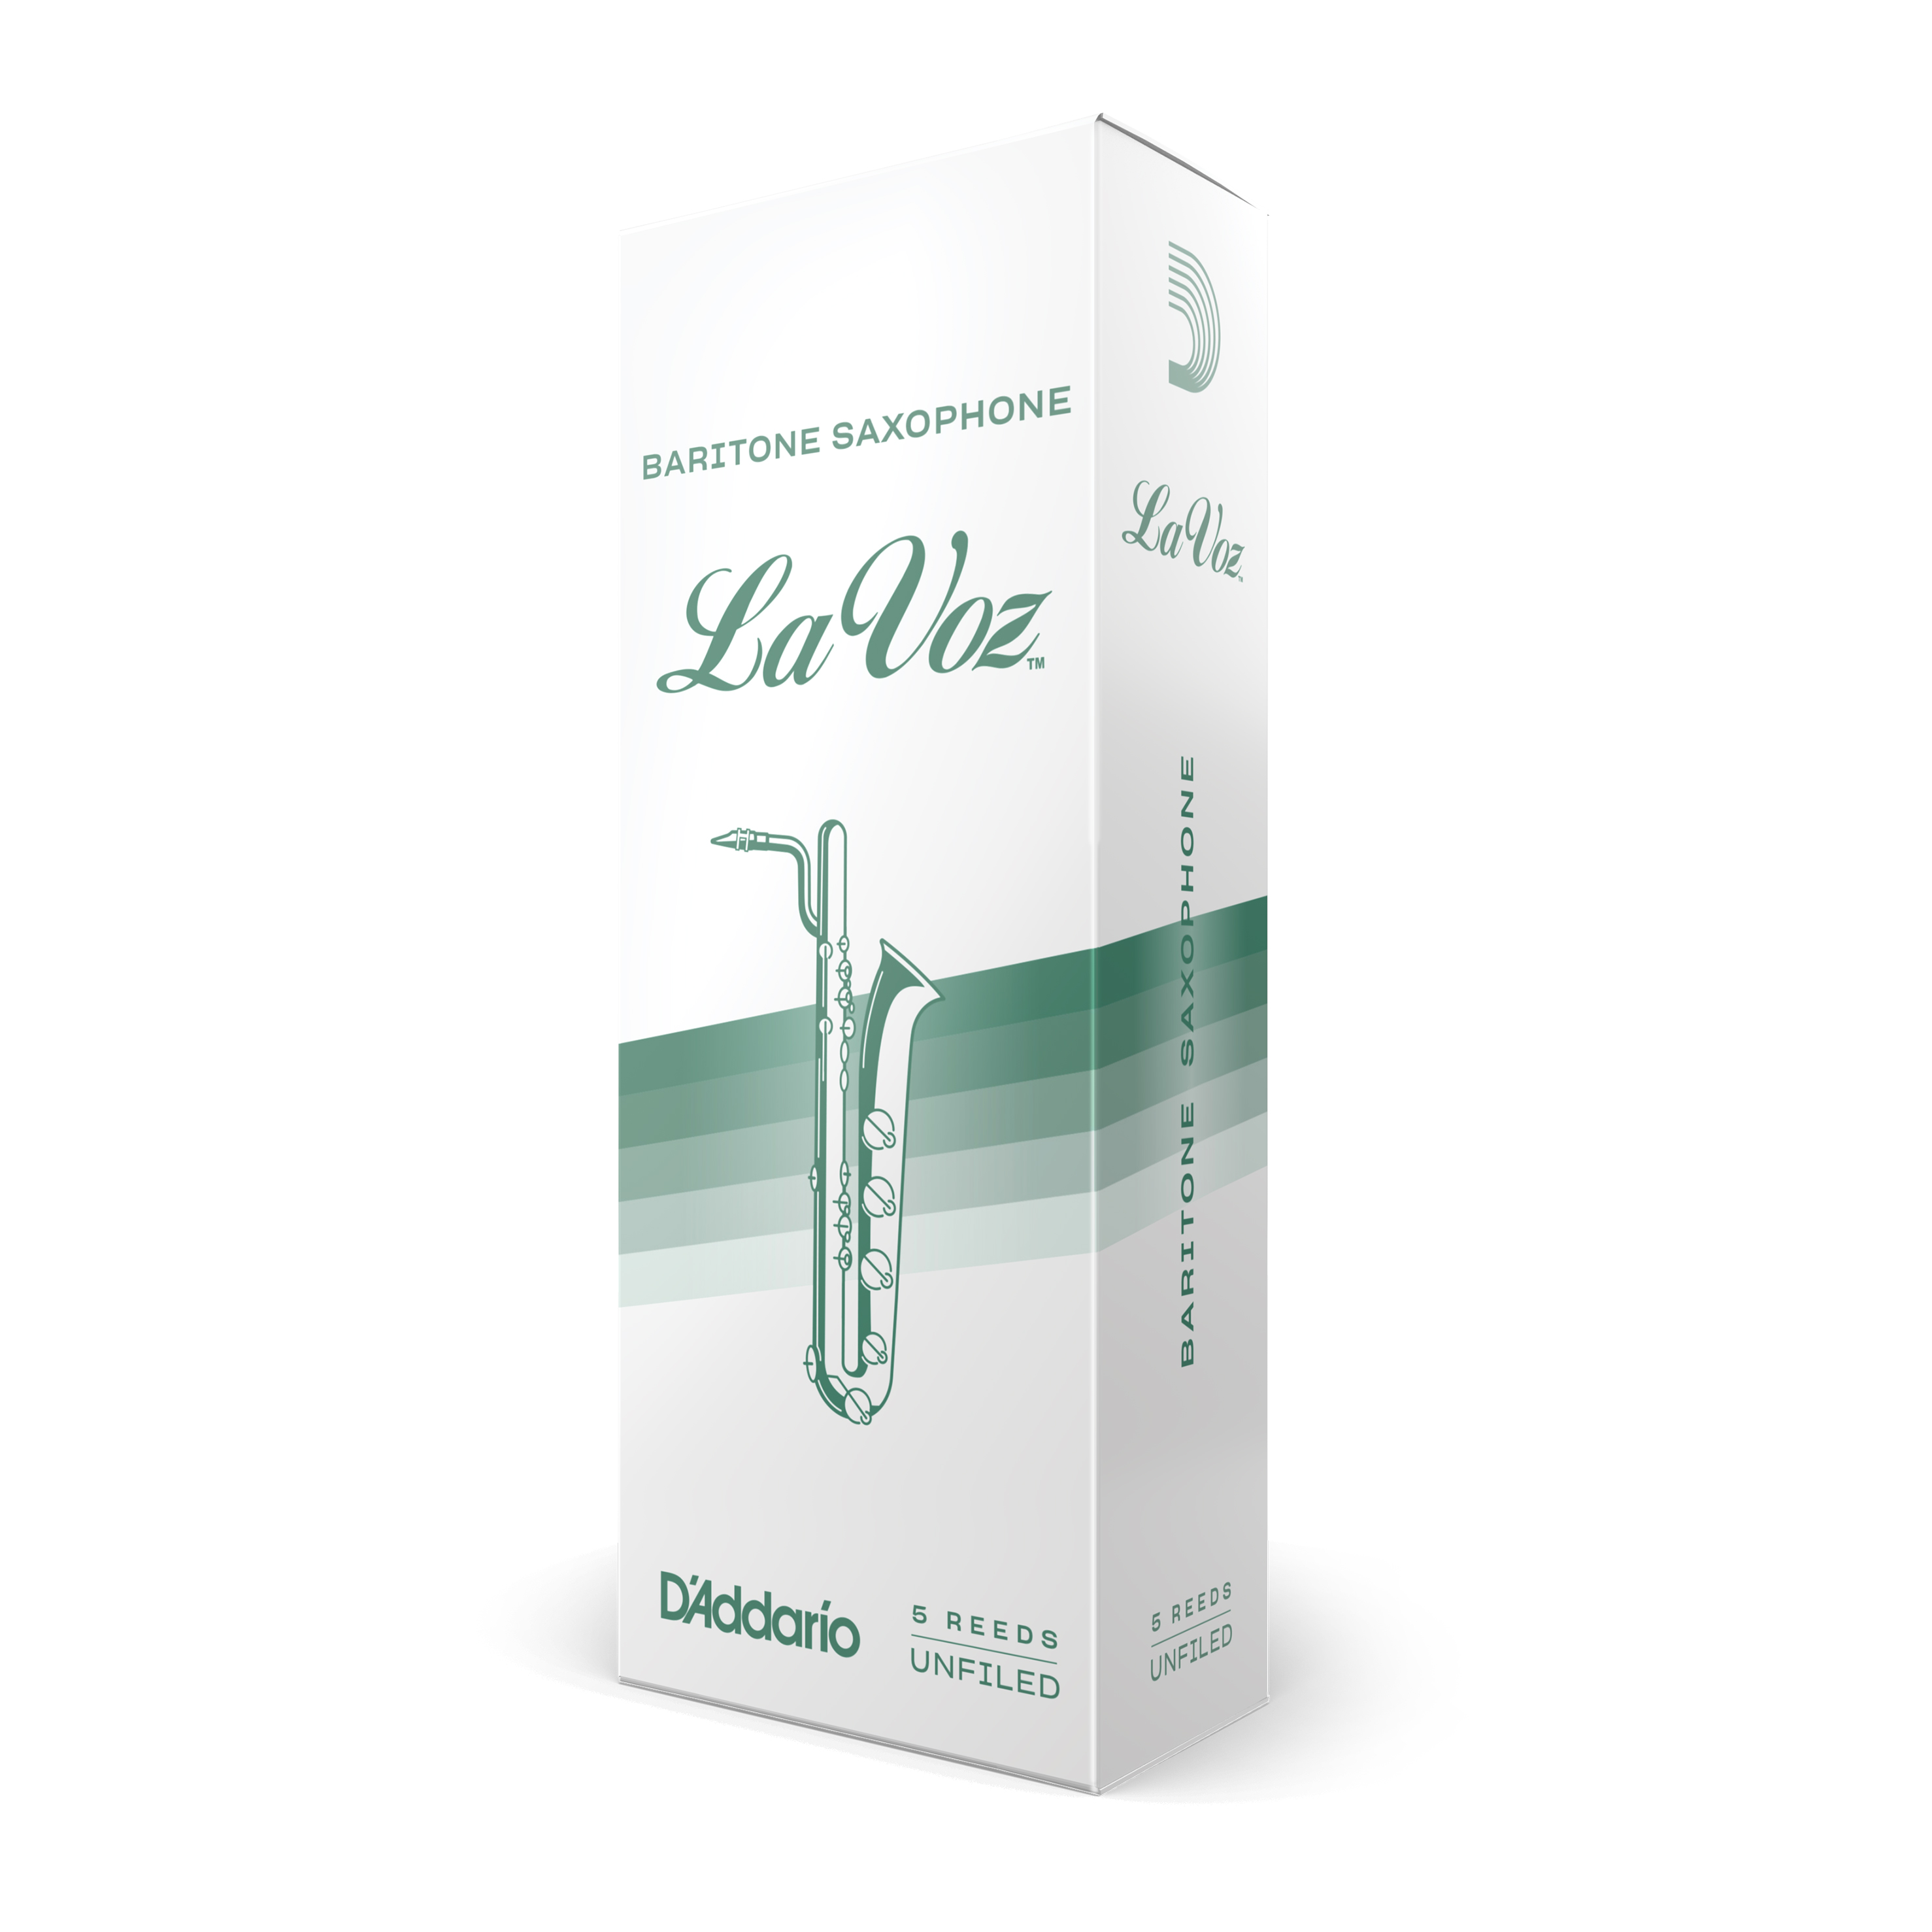 box of five LaVoz Baritone Saxophone Reeds- Strength Medium Hard